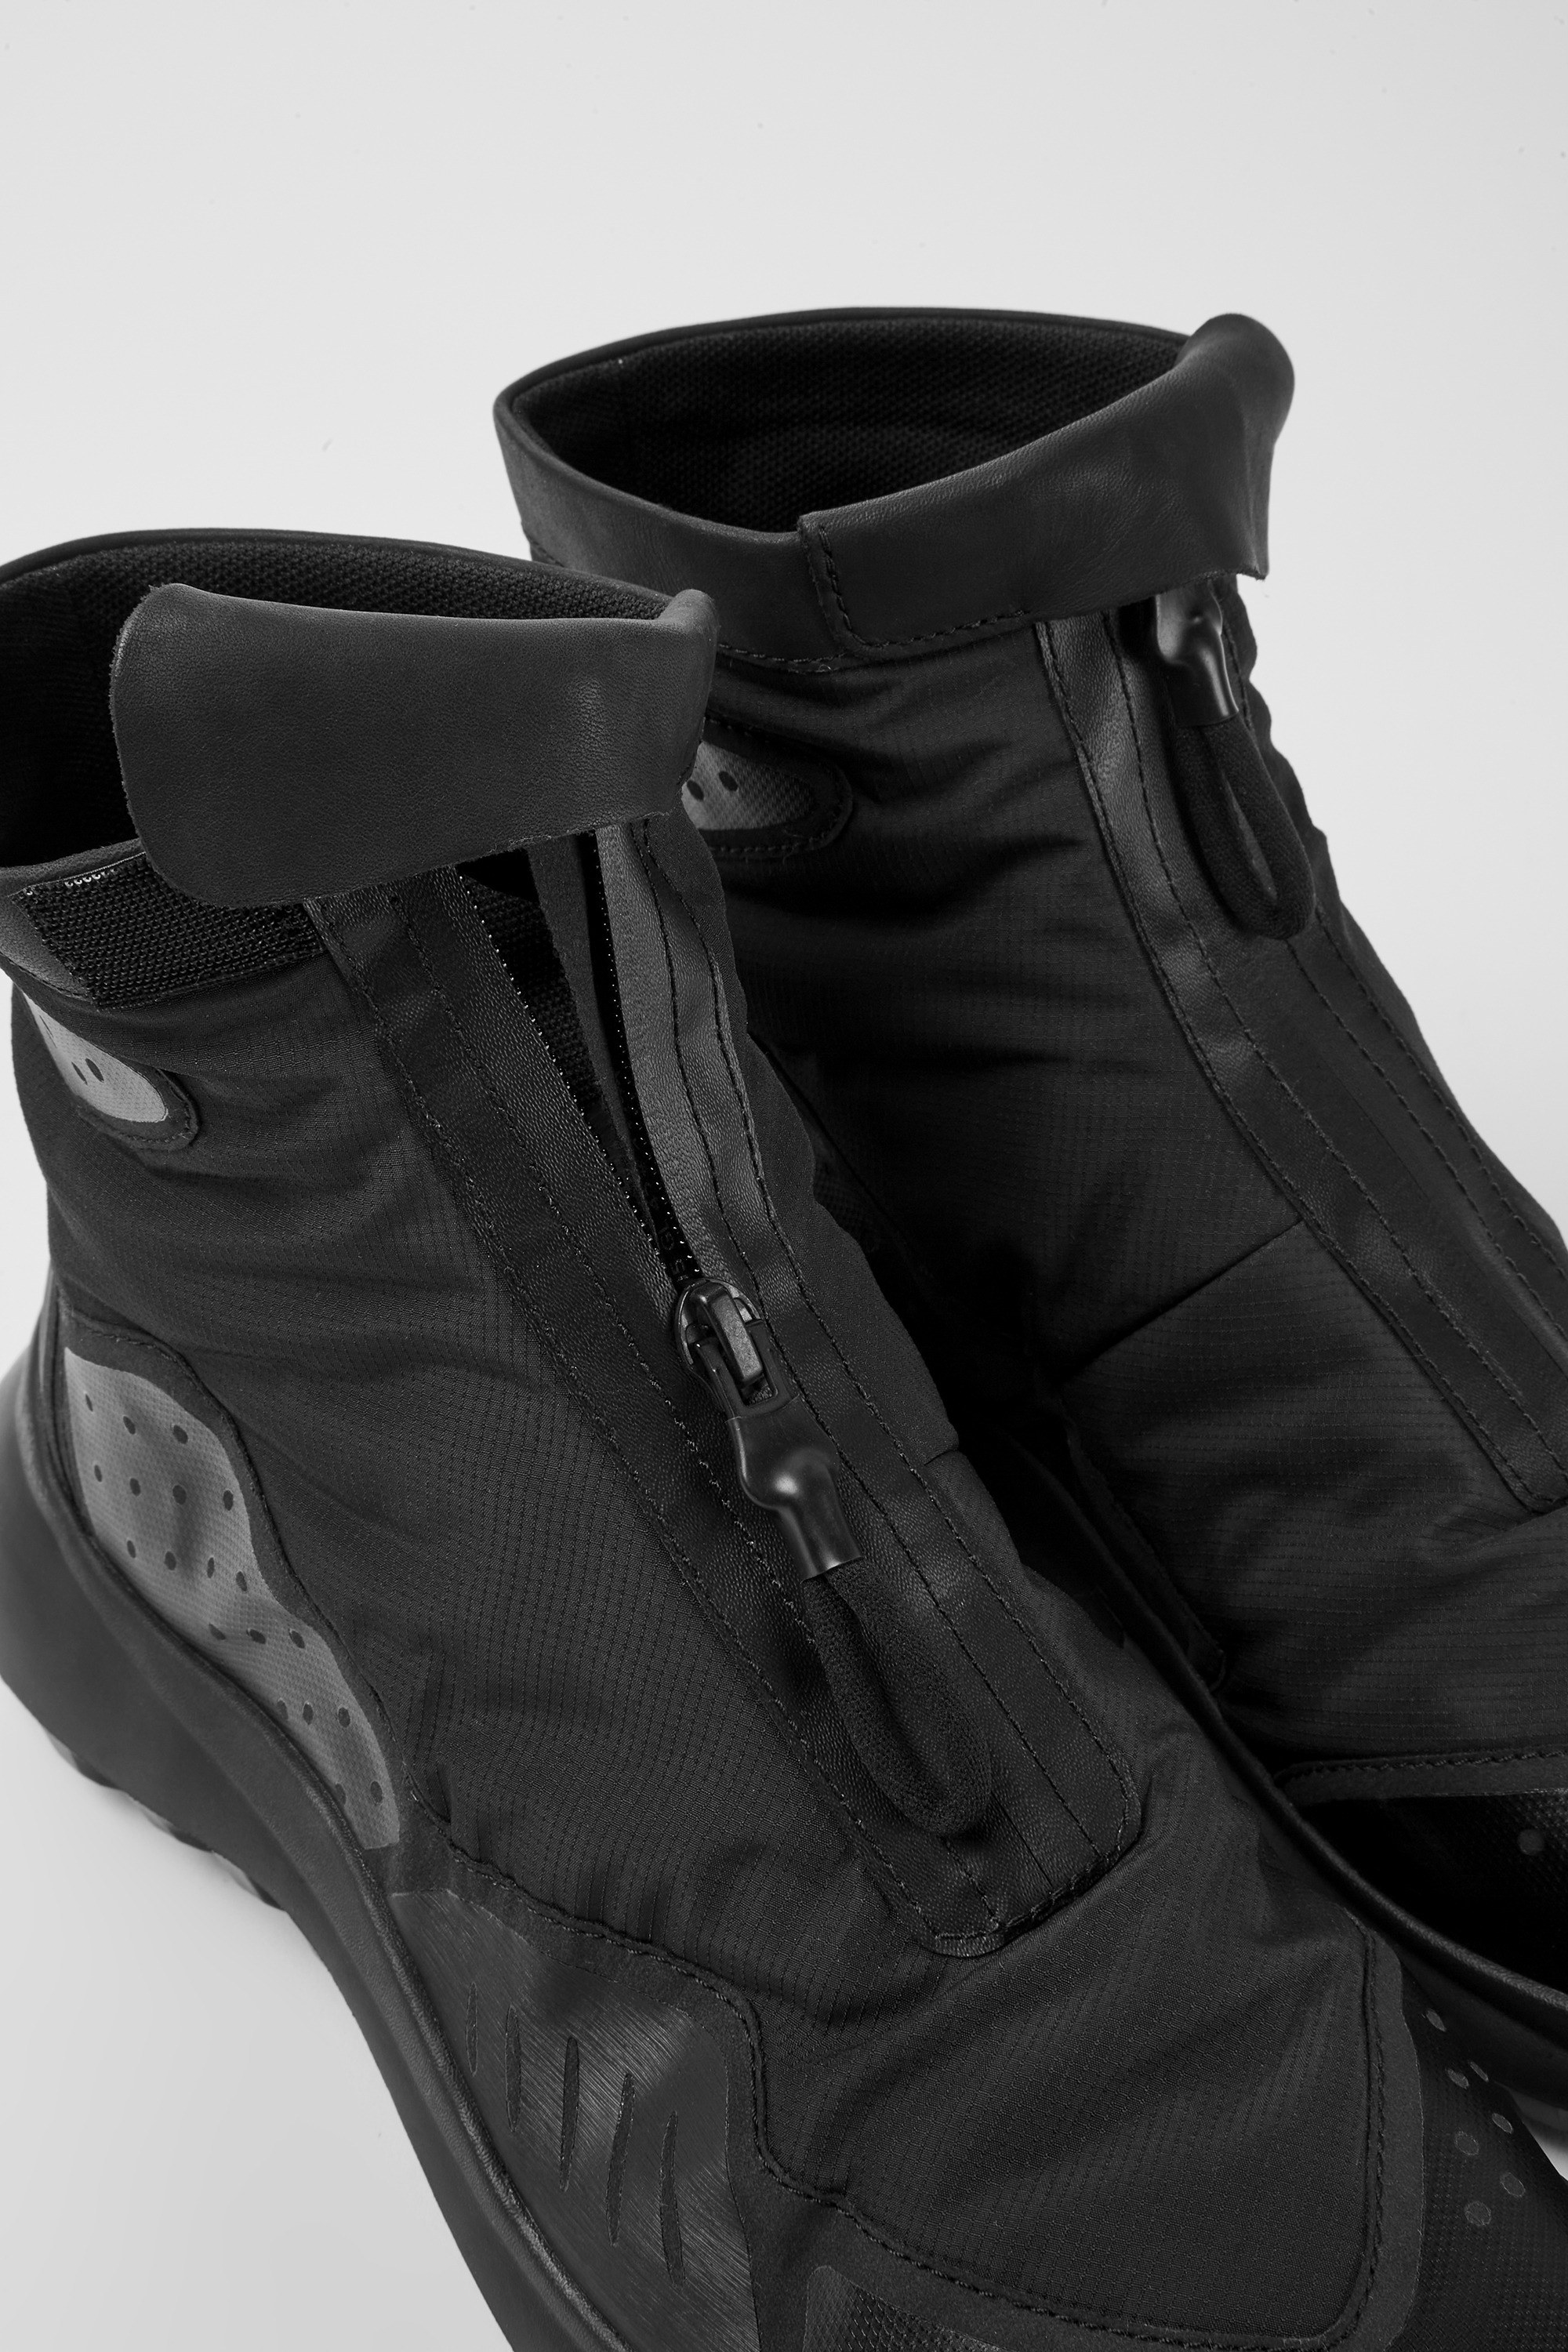 CRCLR Black Ankle Boots for Men - Spring/Summer collection 